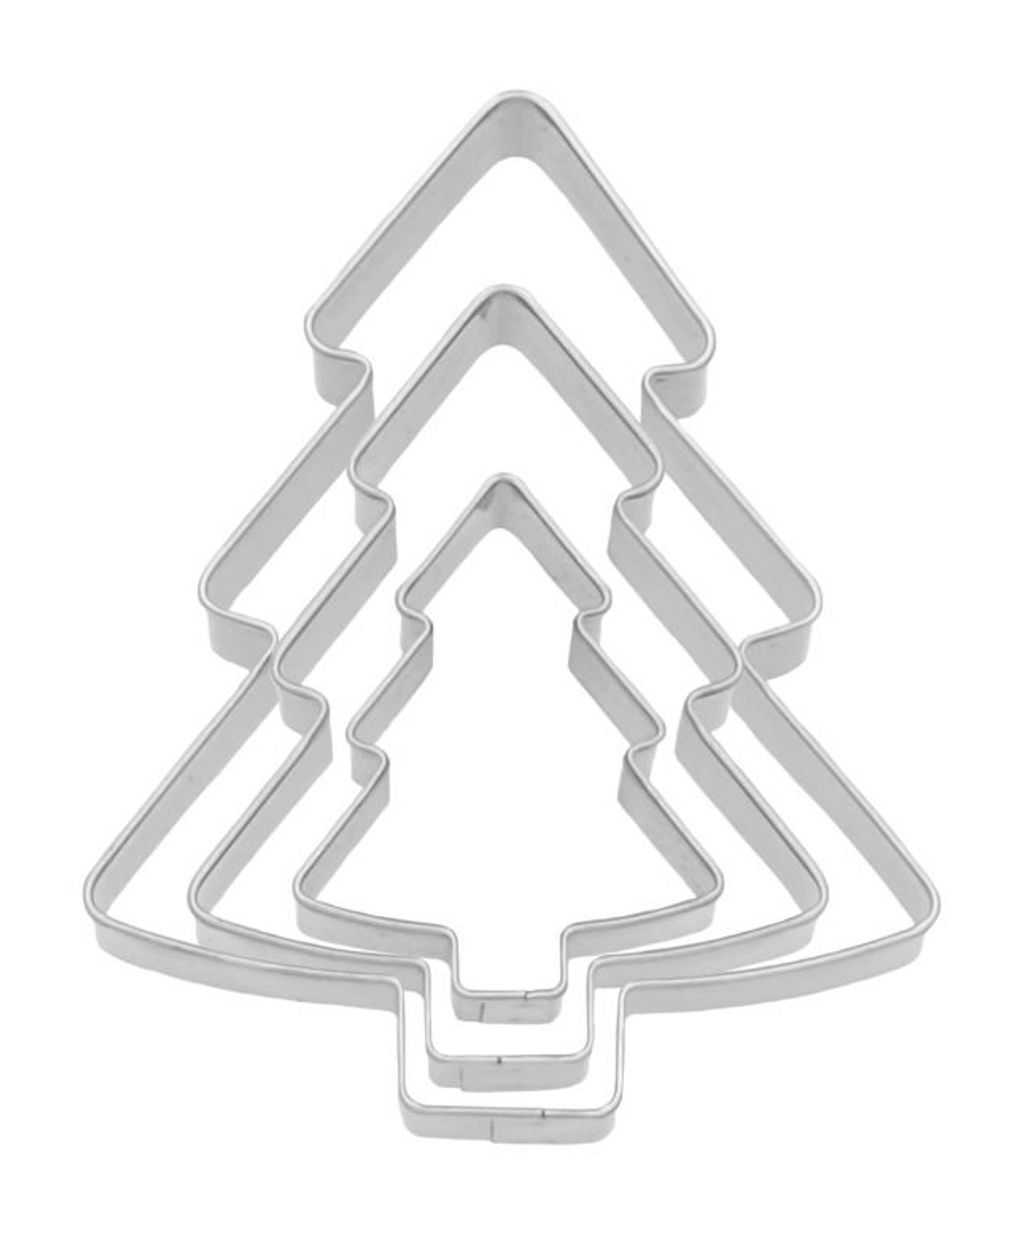 Uitsteekvorm kerstboom set van 3